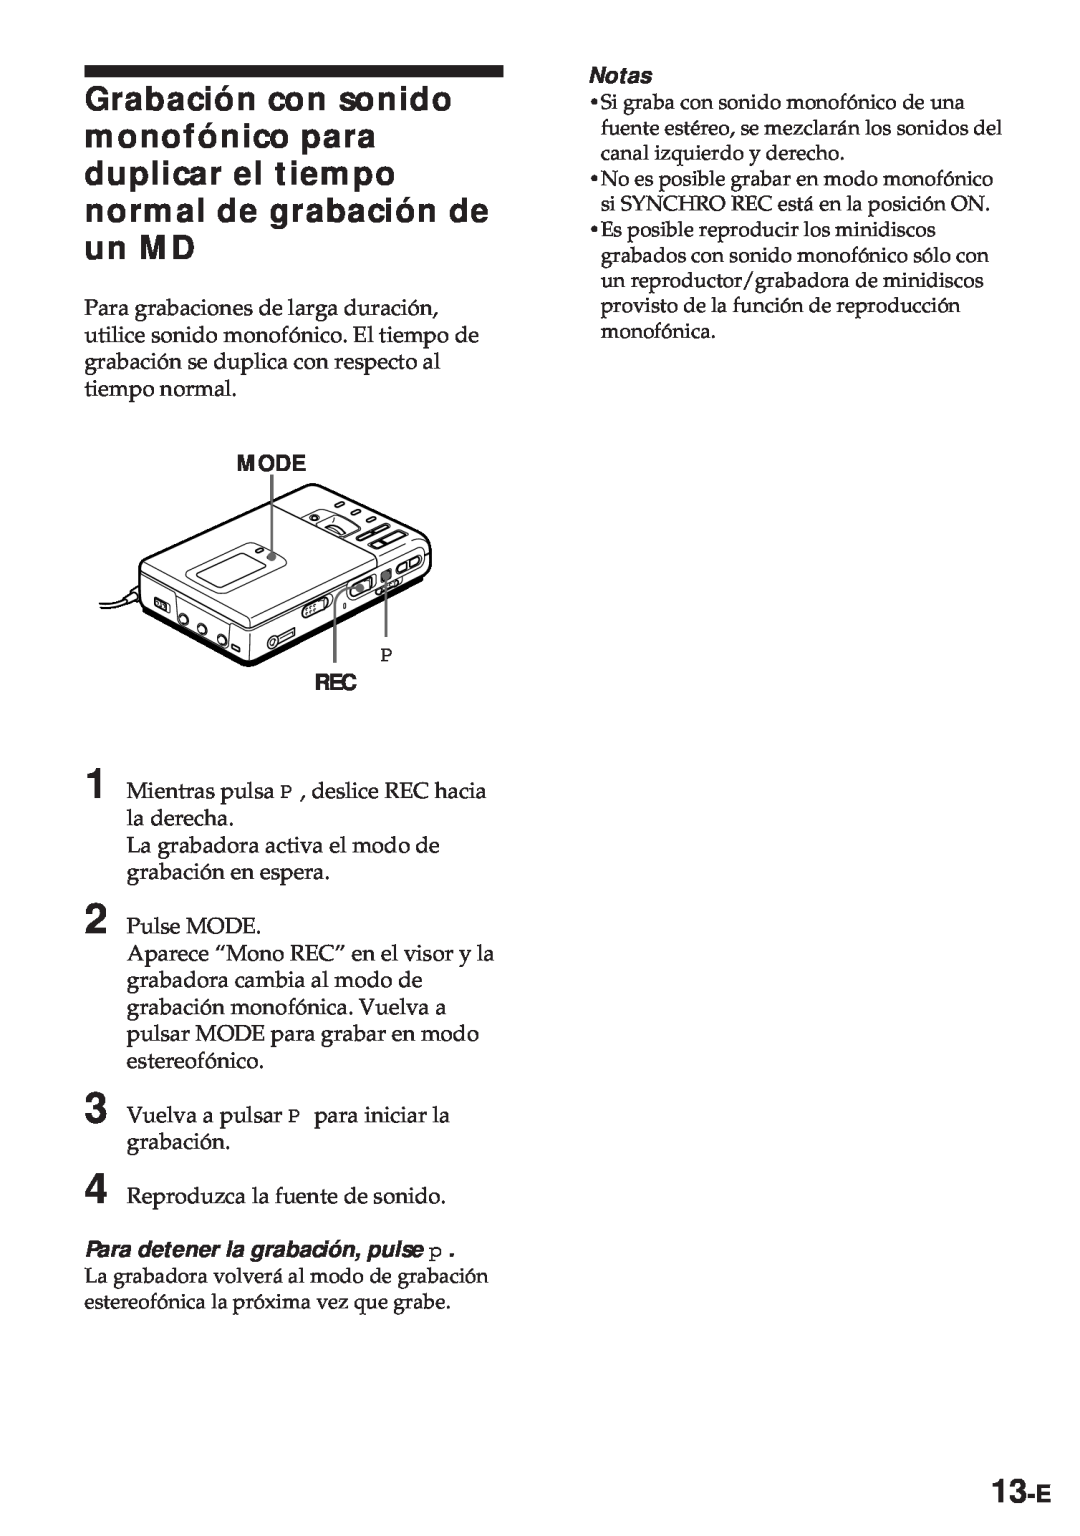 Sony MZ-R30 operating instructions 13-E, Mode, Para detener la grabación, pulse p, Notas 